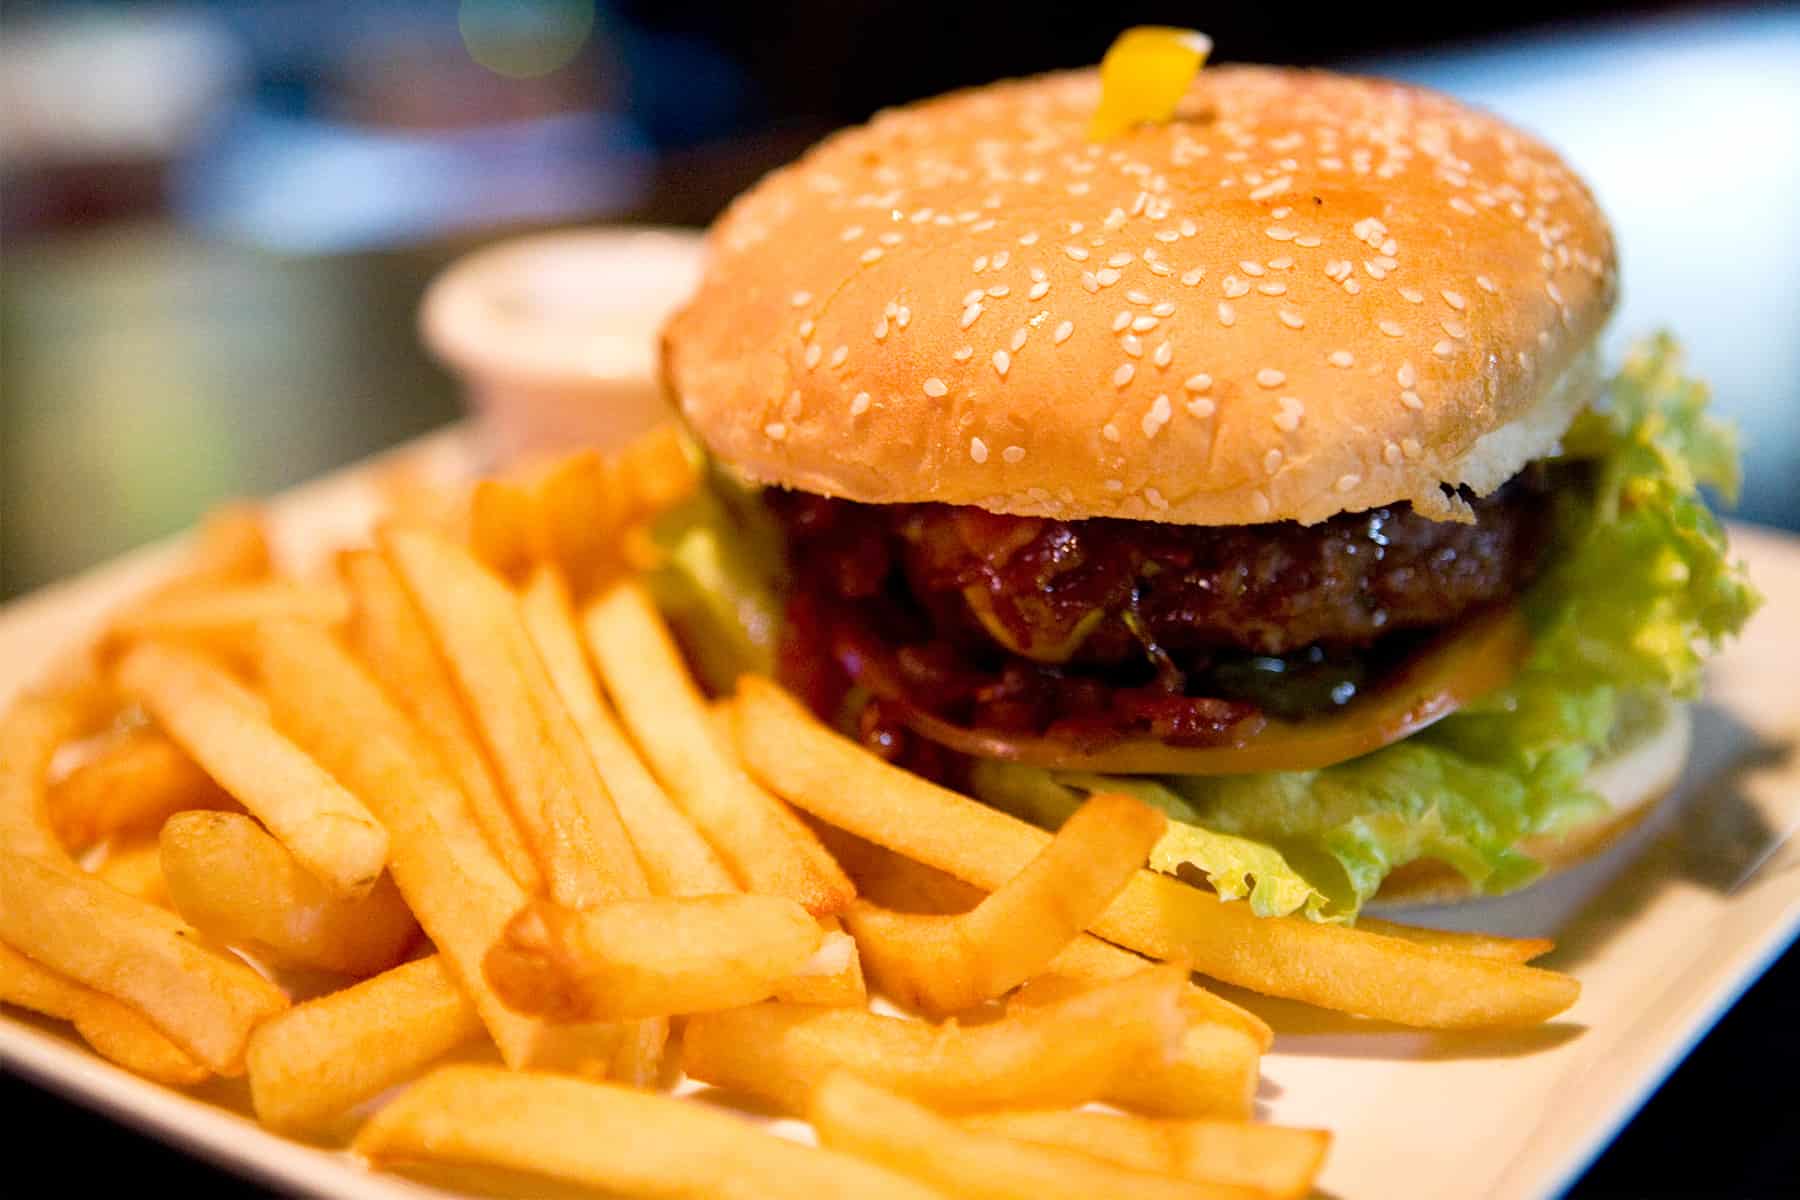 Fast food tax: A greasy burger